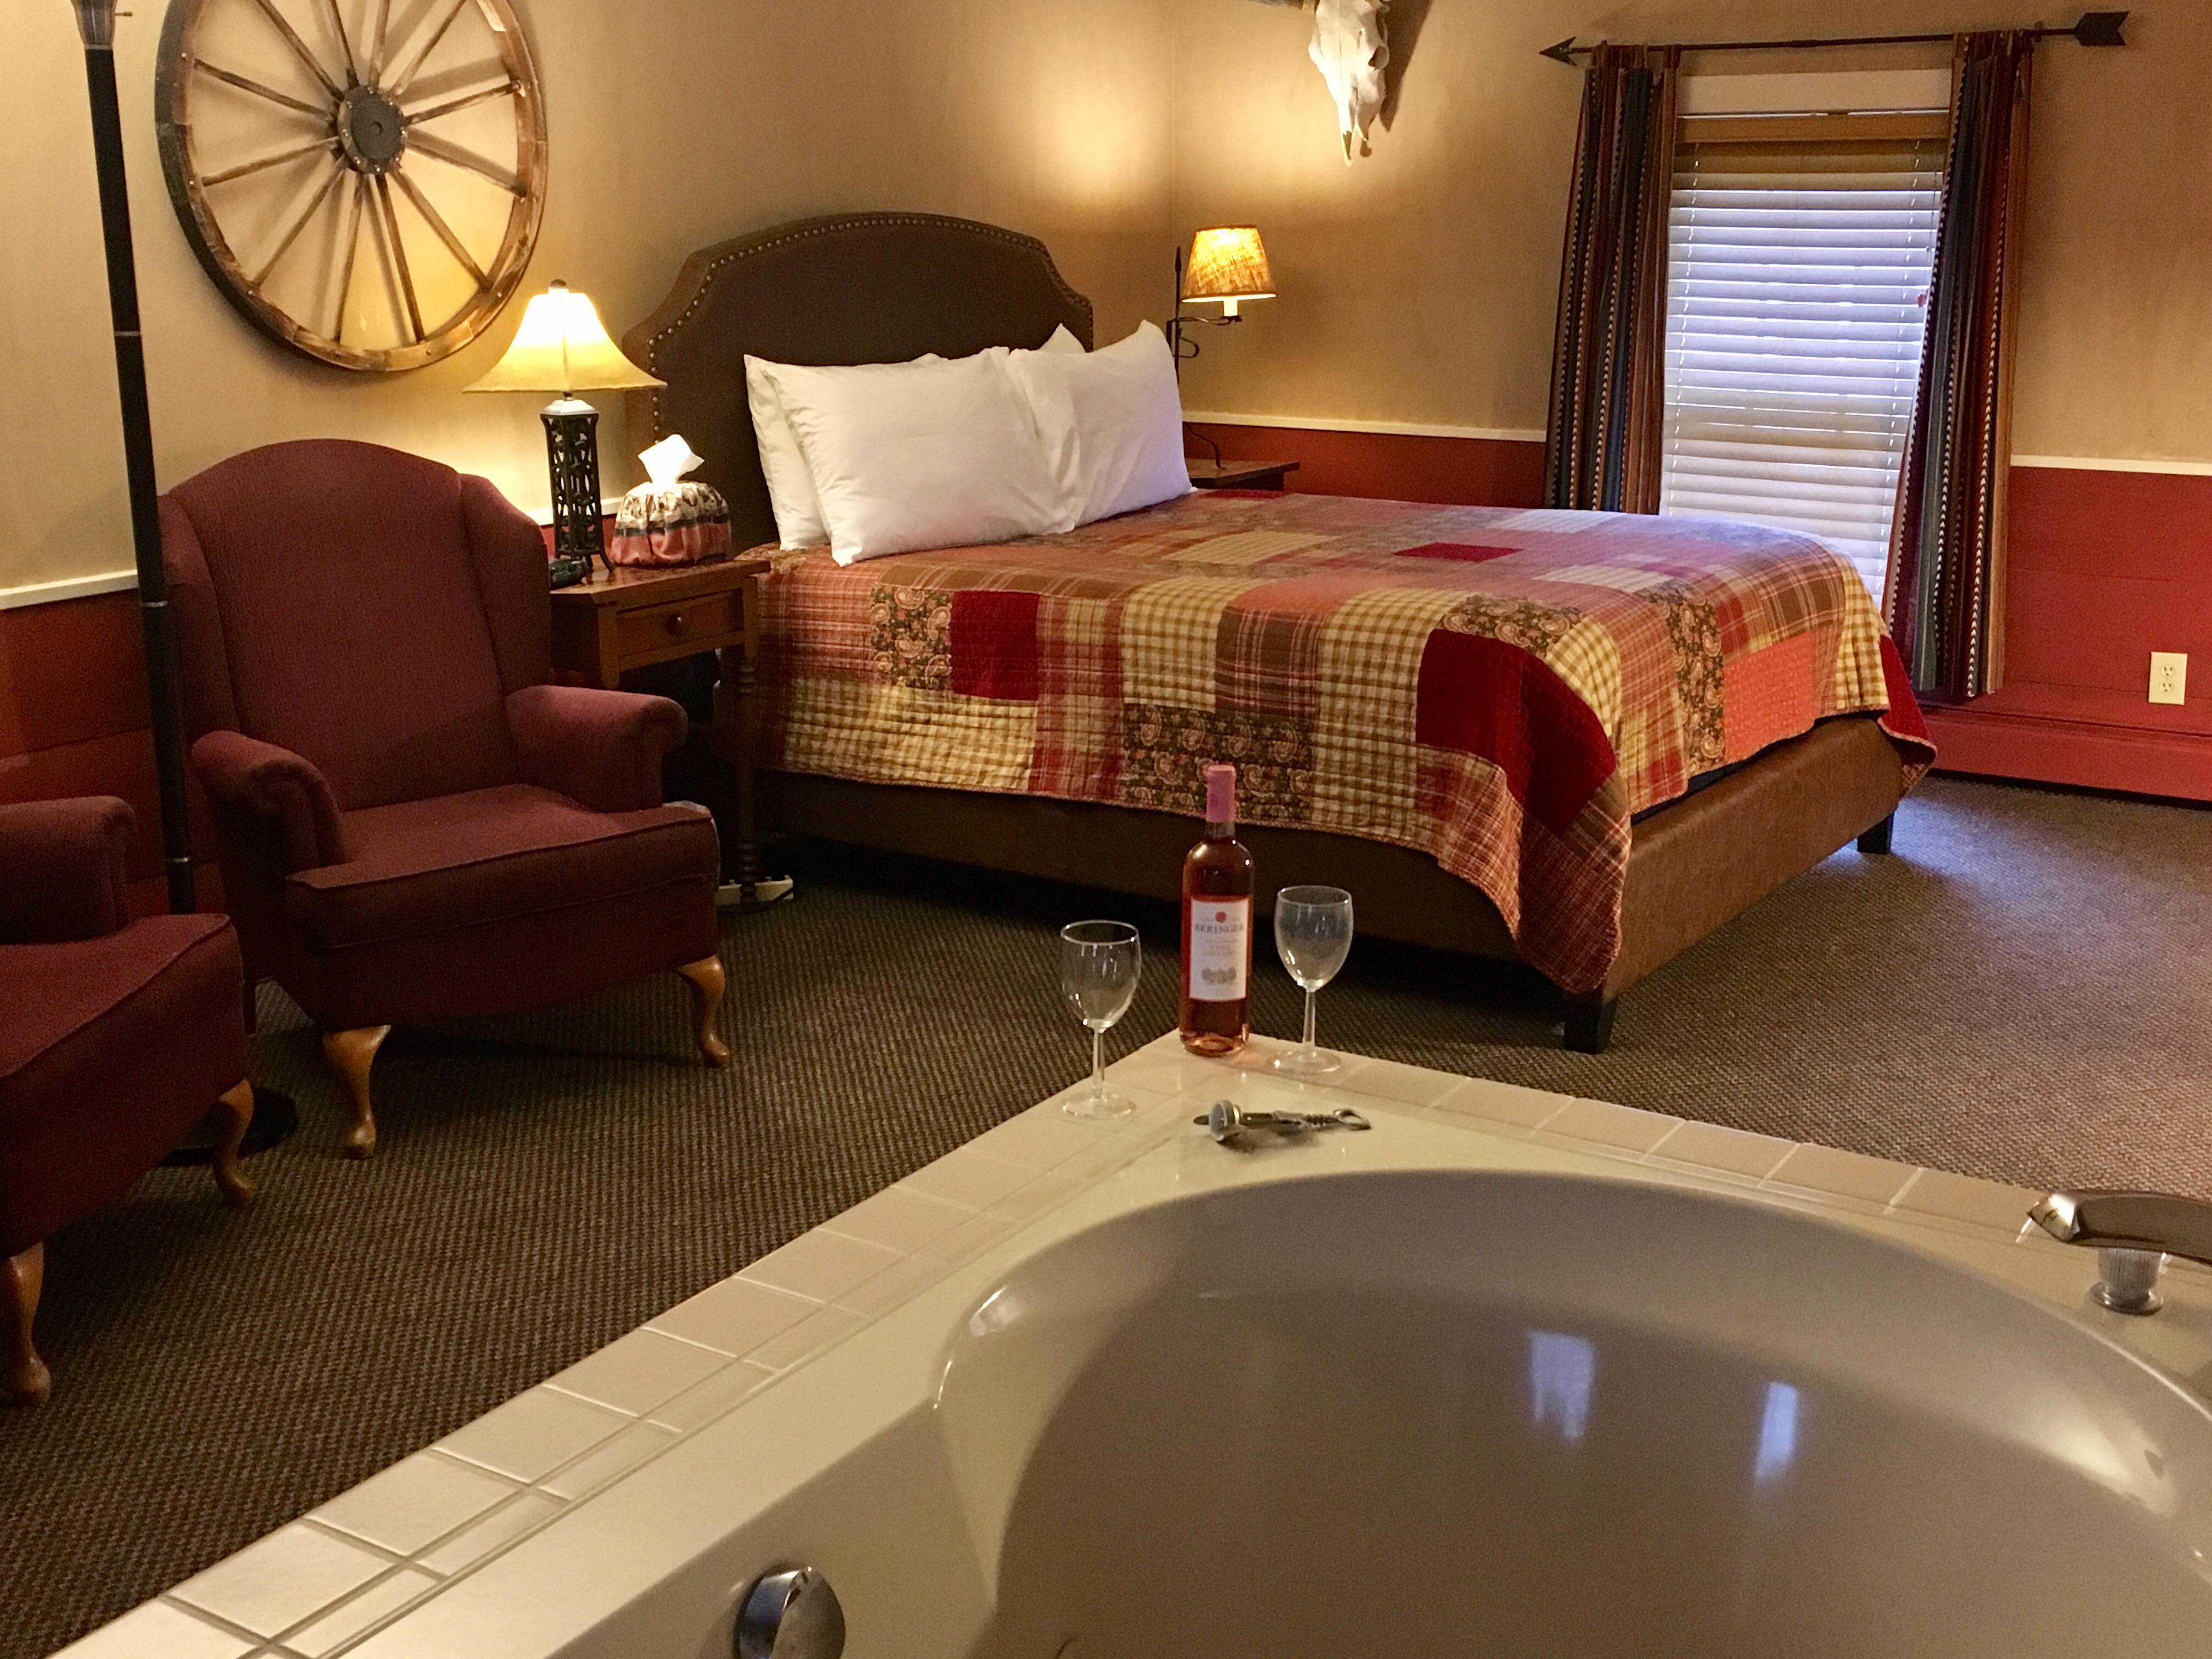 Rustic bedroom with wagon wheel, jacuzzi tub, and wine